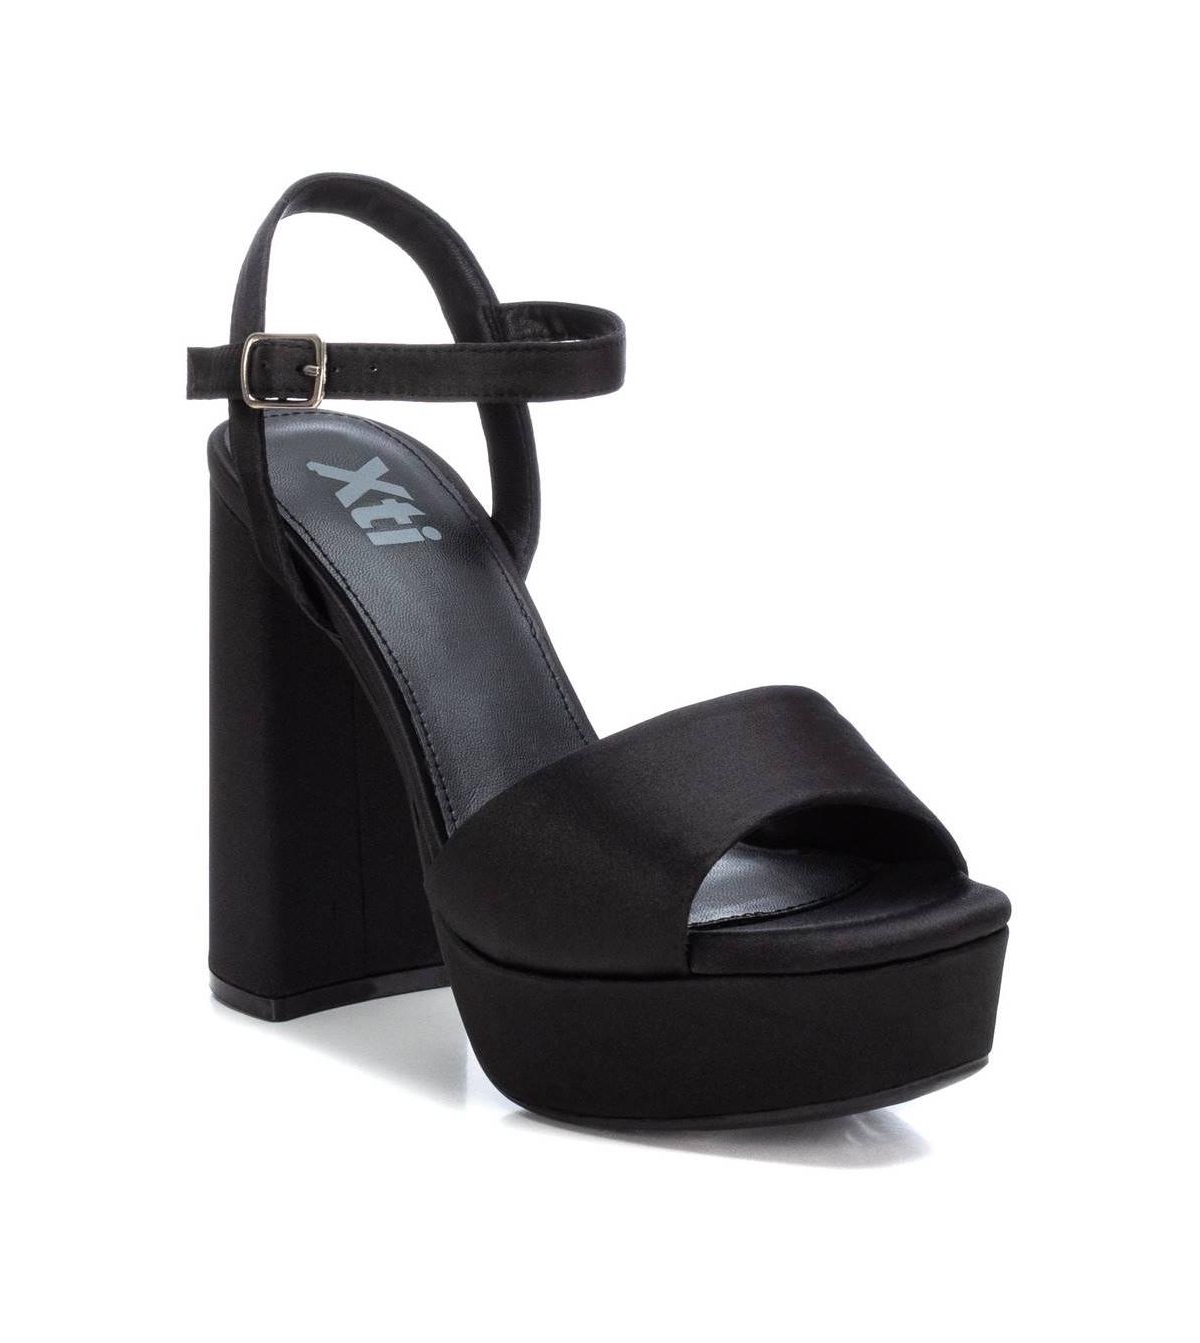 Women's Heeled Platform Sandals By Xti, - Black